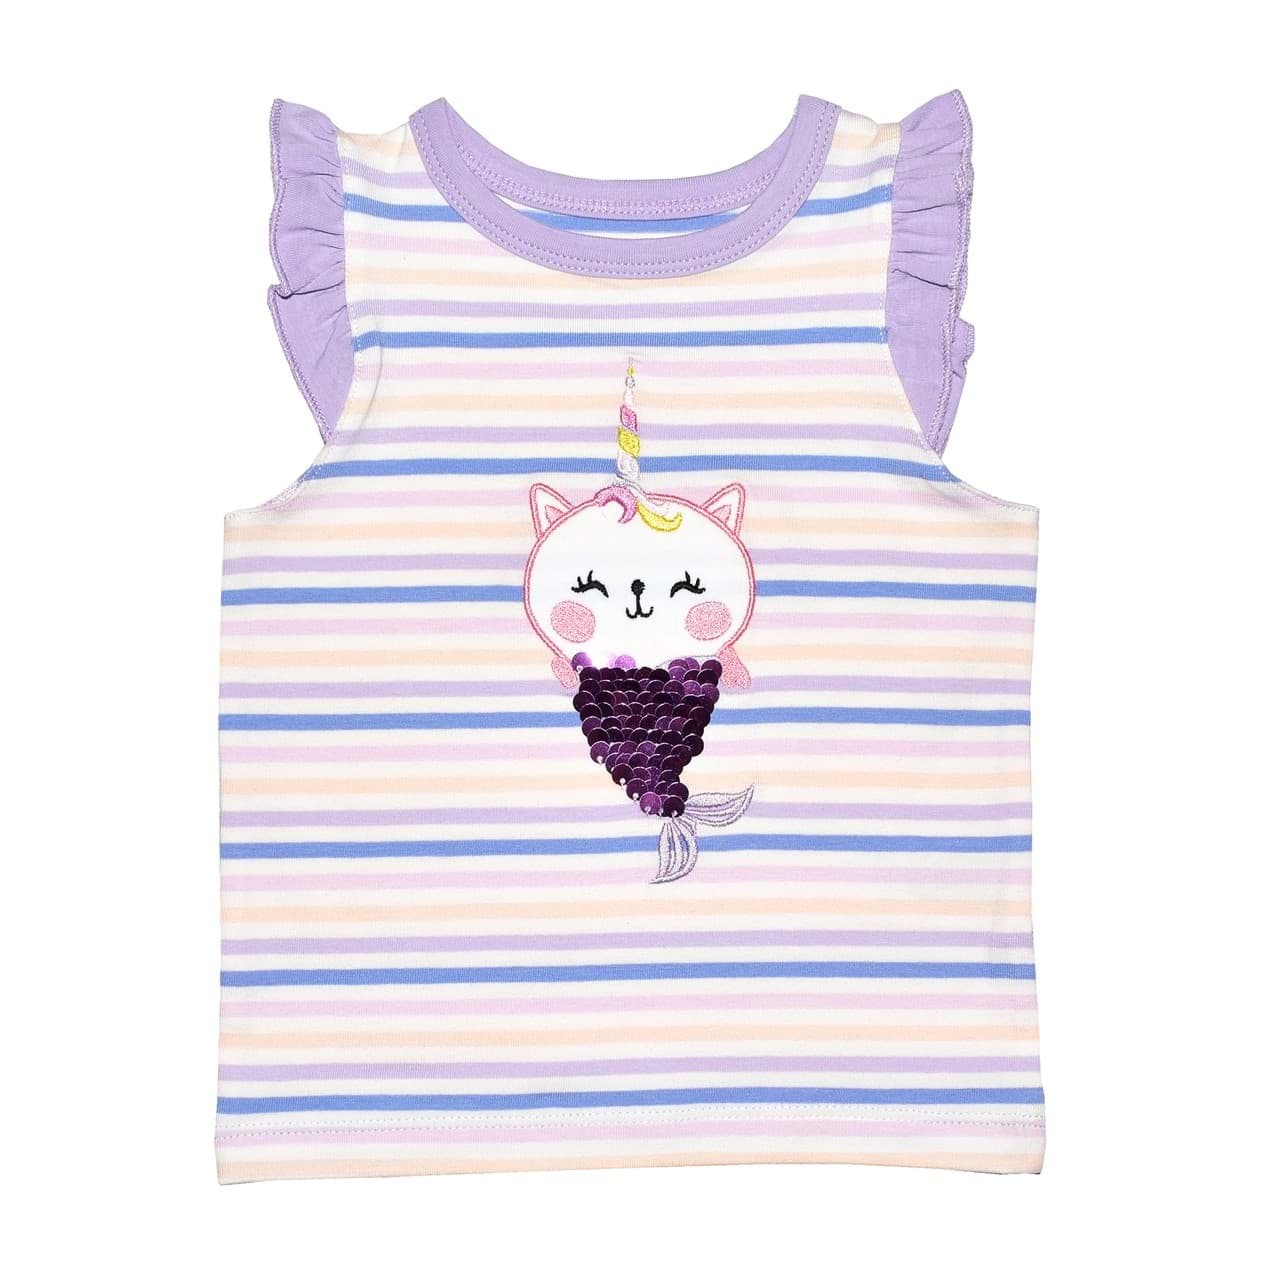 Merkitty Kız Bebek Çift Yönlü Pullu Kısa Kol T-shirt resmi